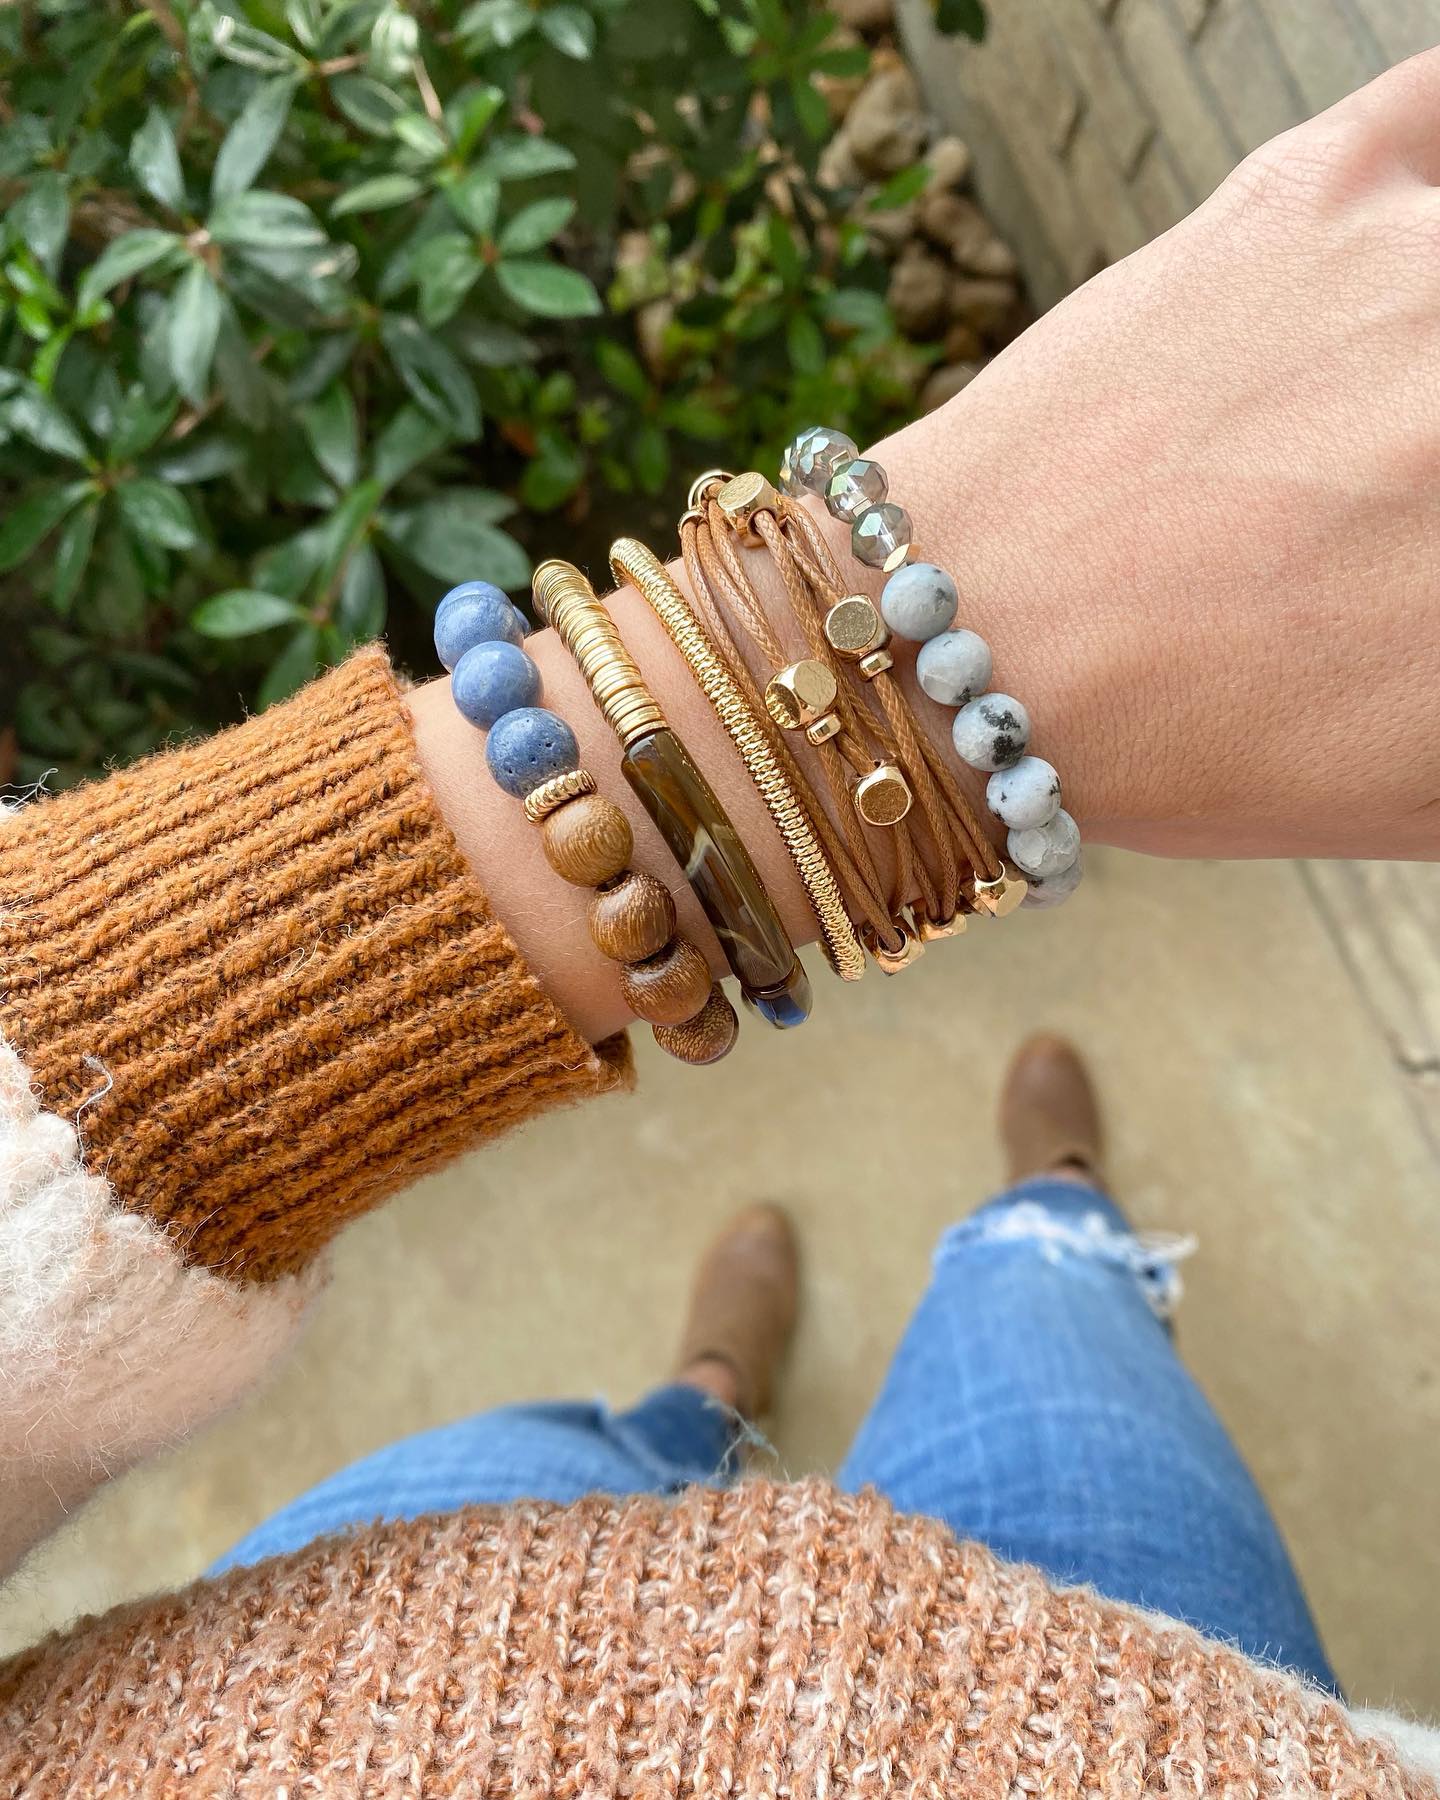 24 Boho Bracelets Wood Beads Mix Stretch Jewelry Gifts Sales Bulk